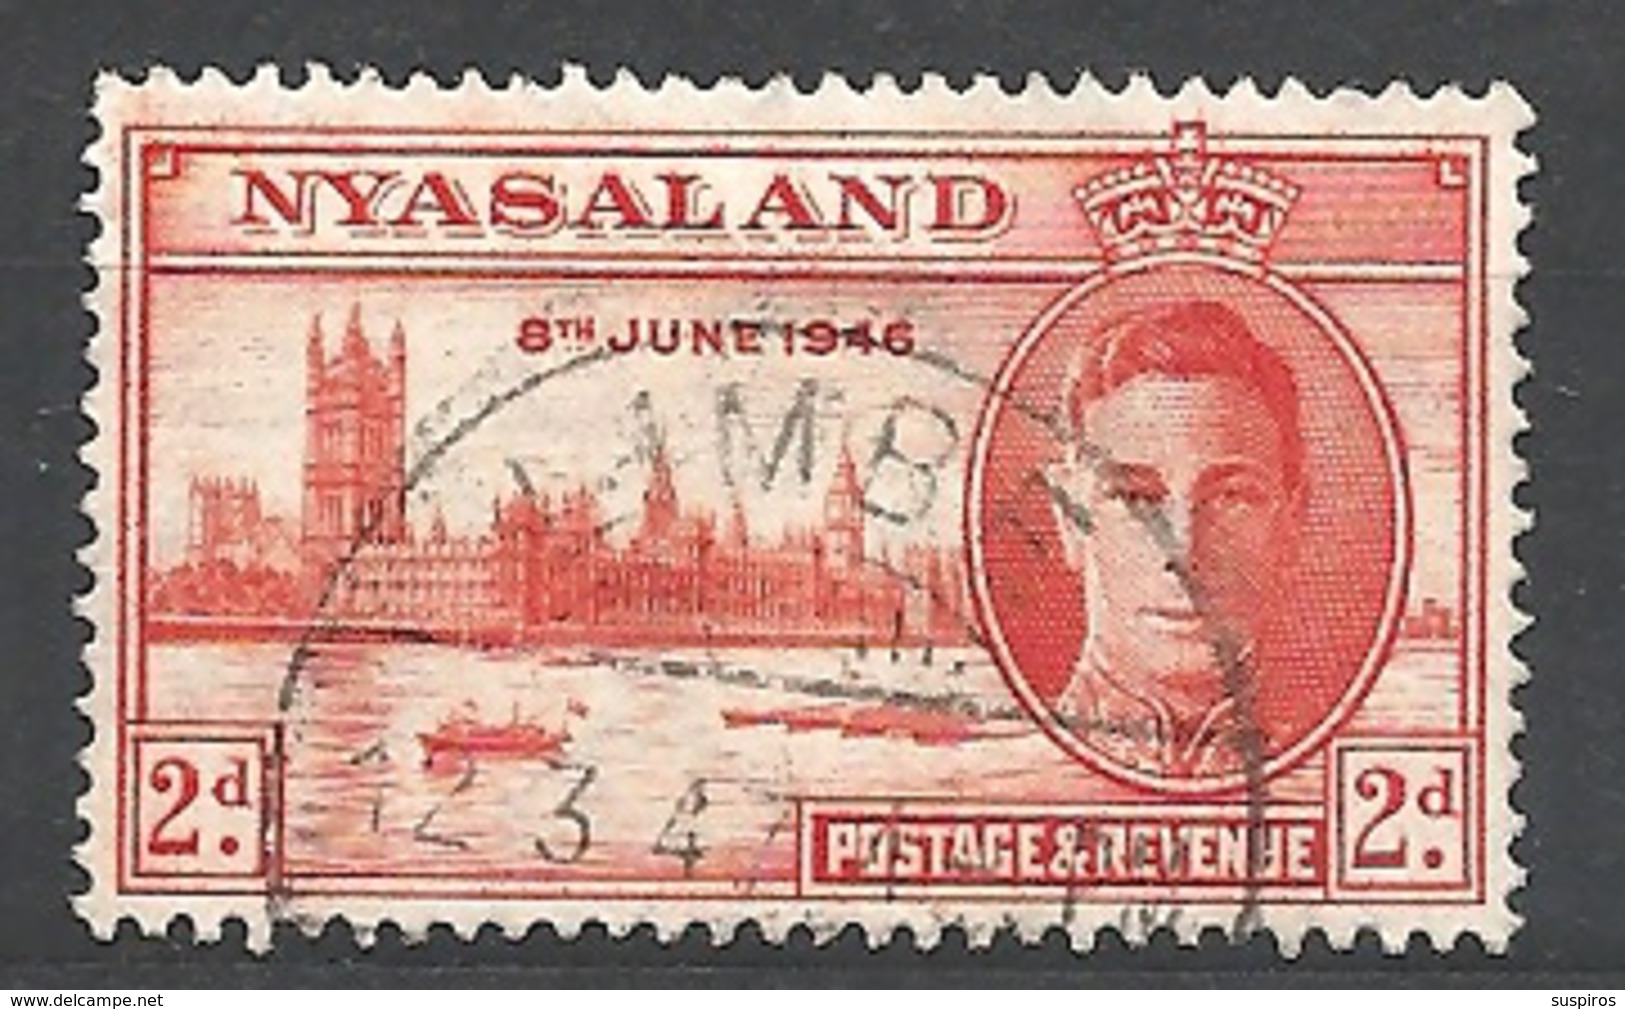 NYASSALAND     1946 The End Of The World War II  King George VI HINGED &   USED - Nyassaland (1907-1953)